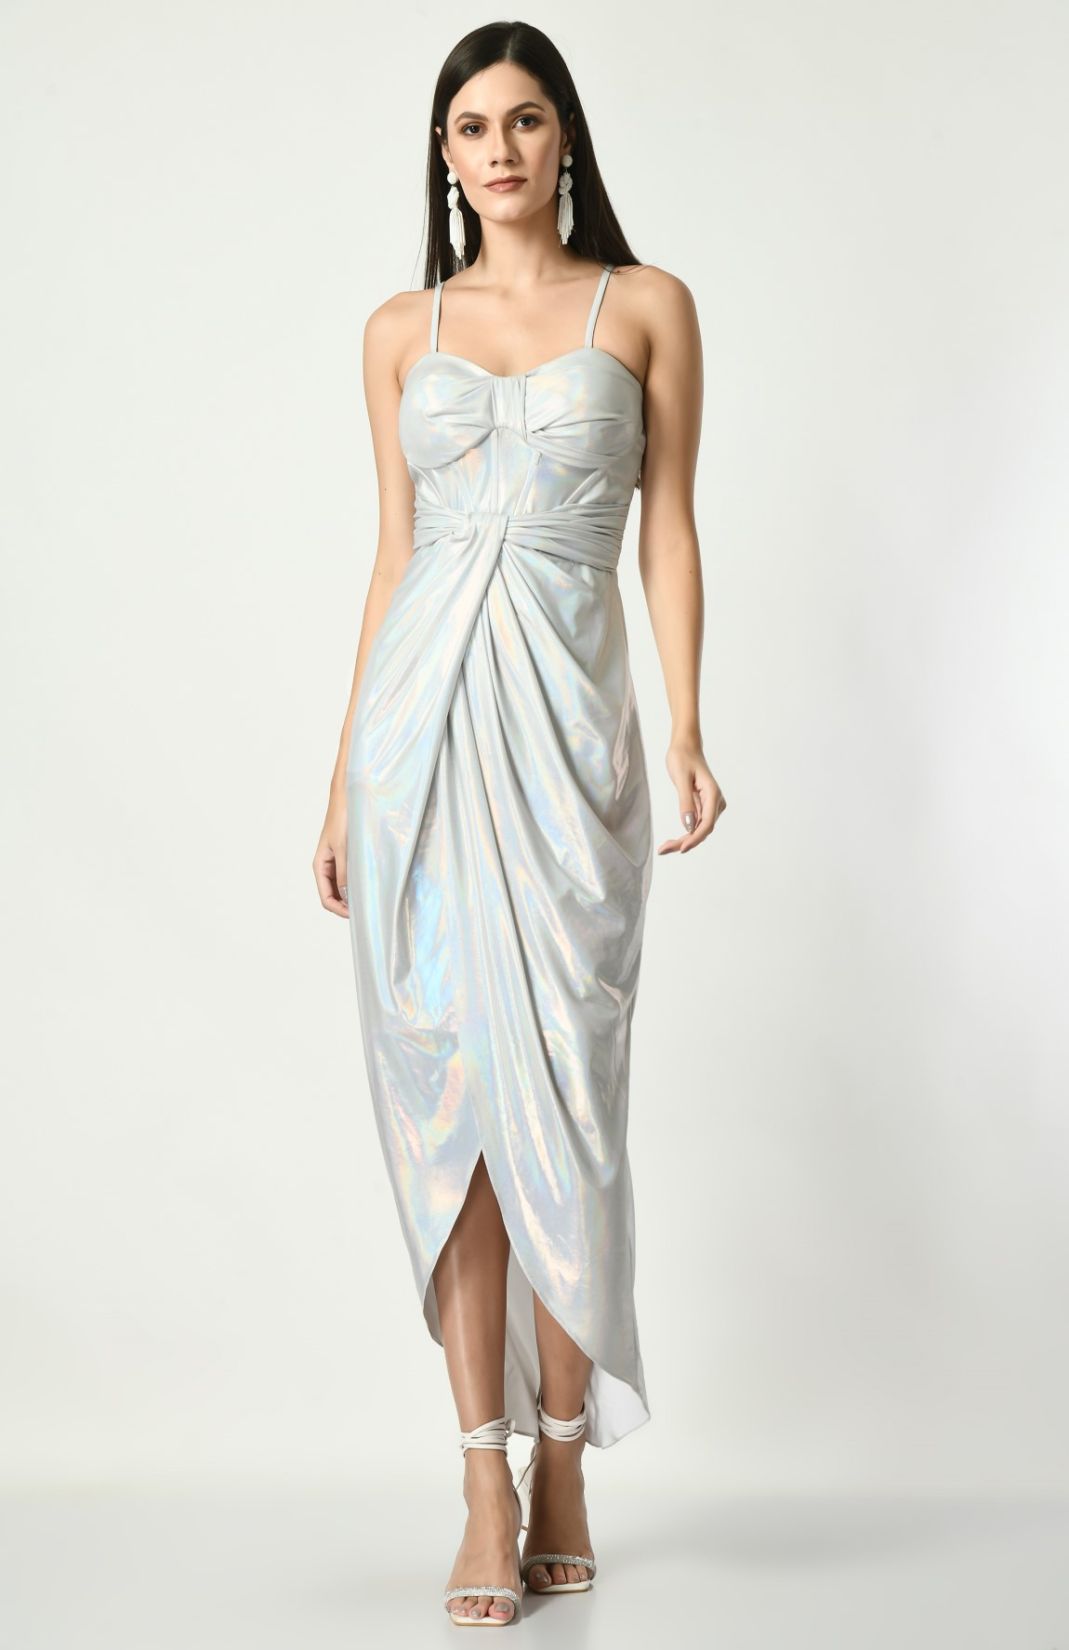 Celeste - Corset Draped Dress In Metallic Silver Color